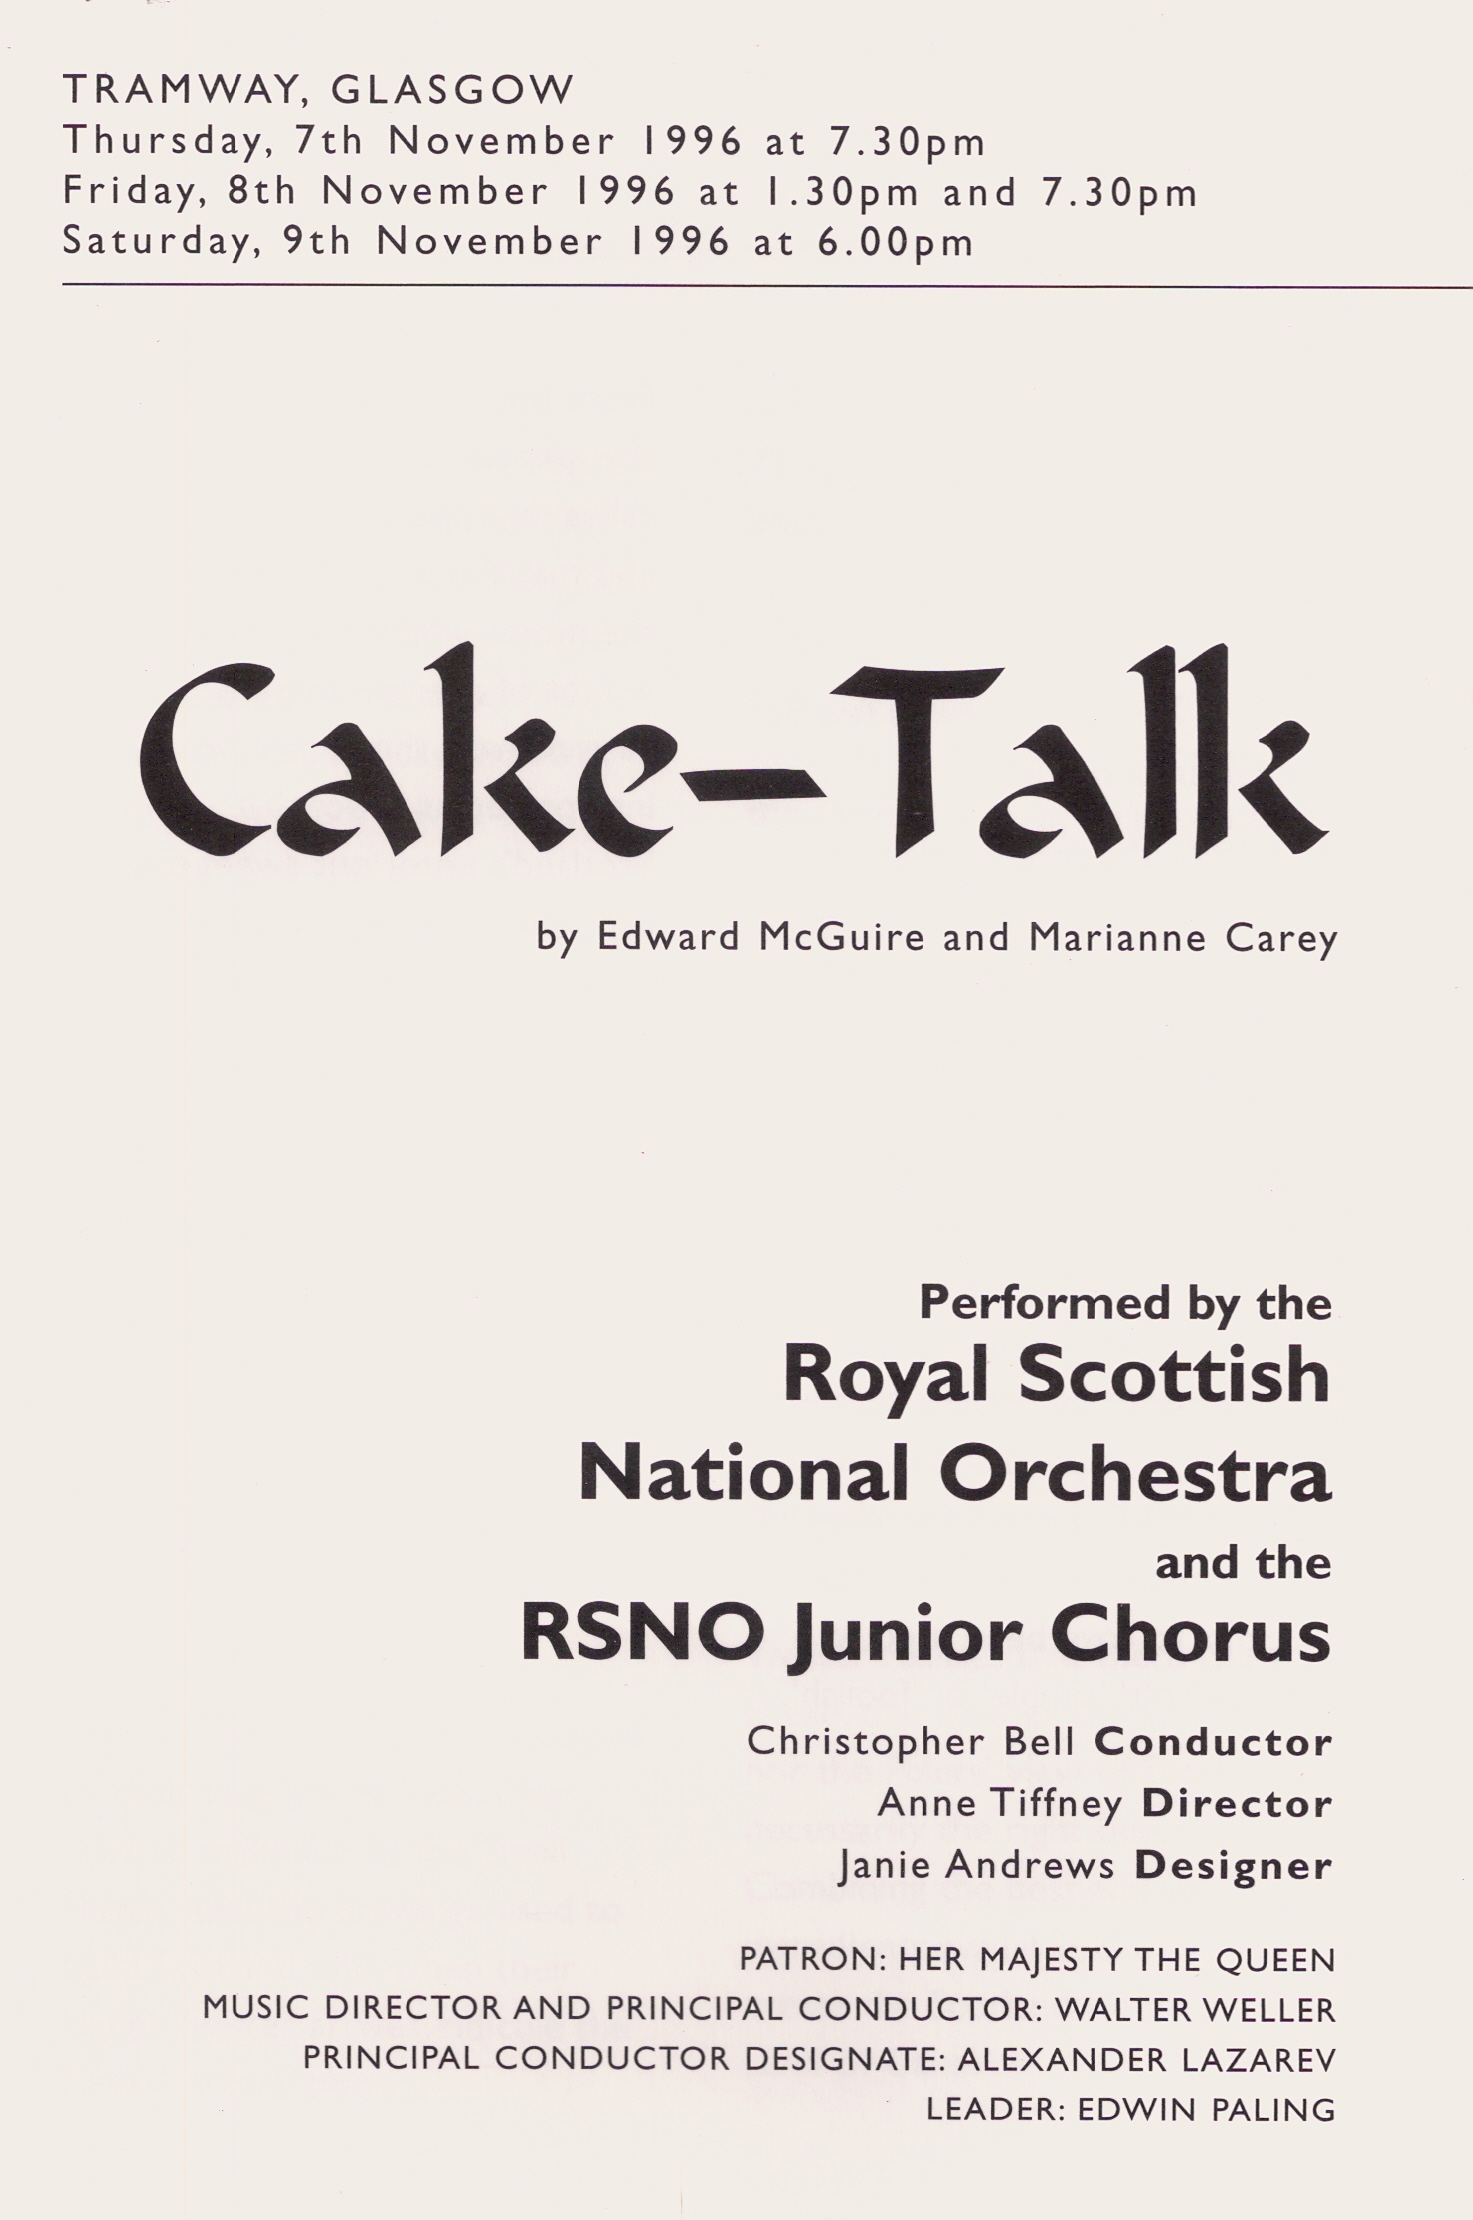 Cake-Talk, music by Eddie McGuire, text by Marianne Carey November 1996